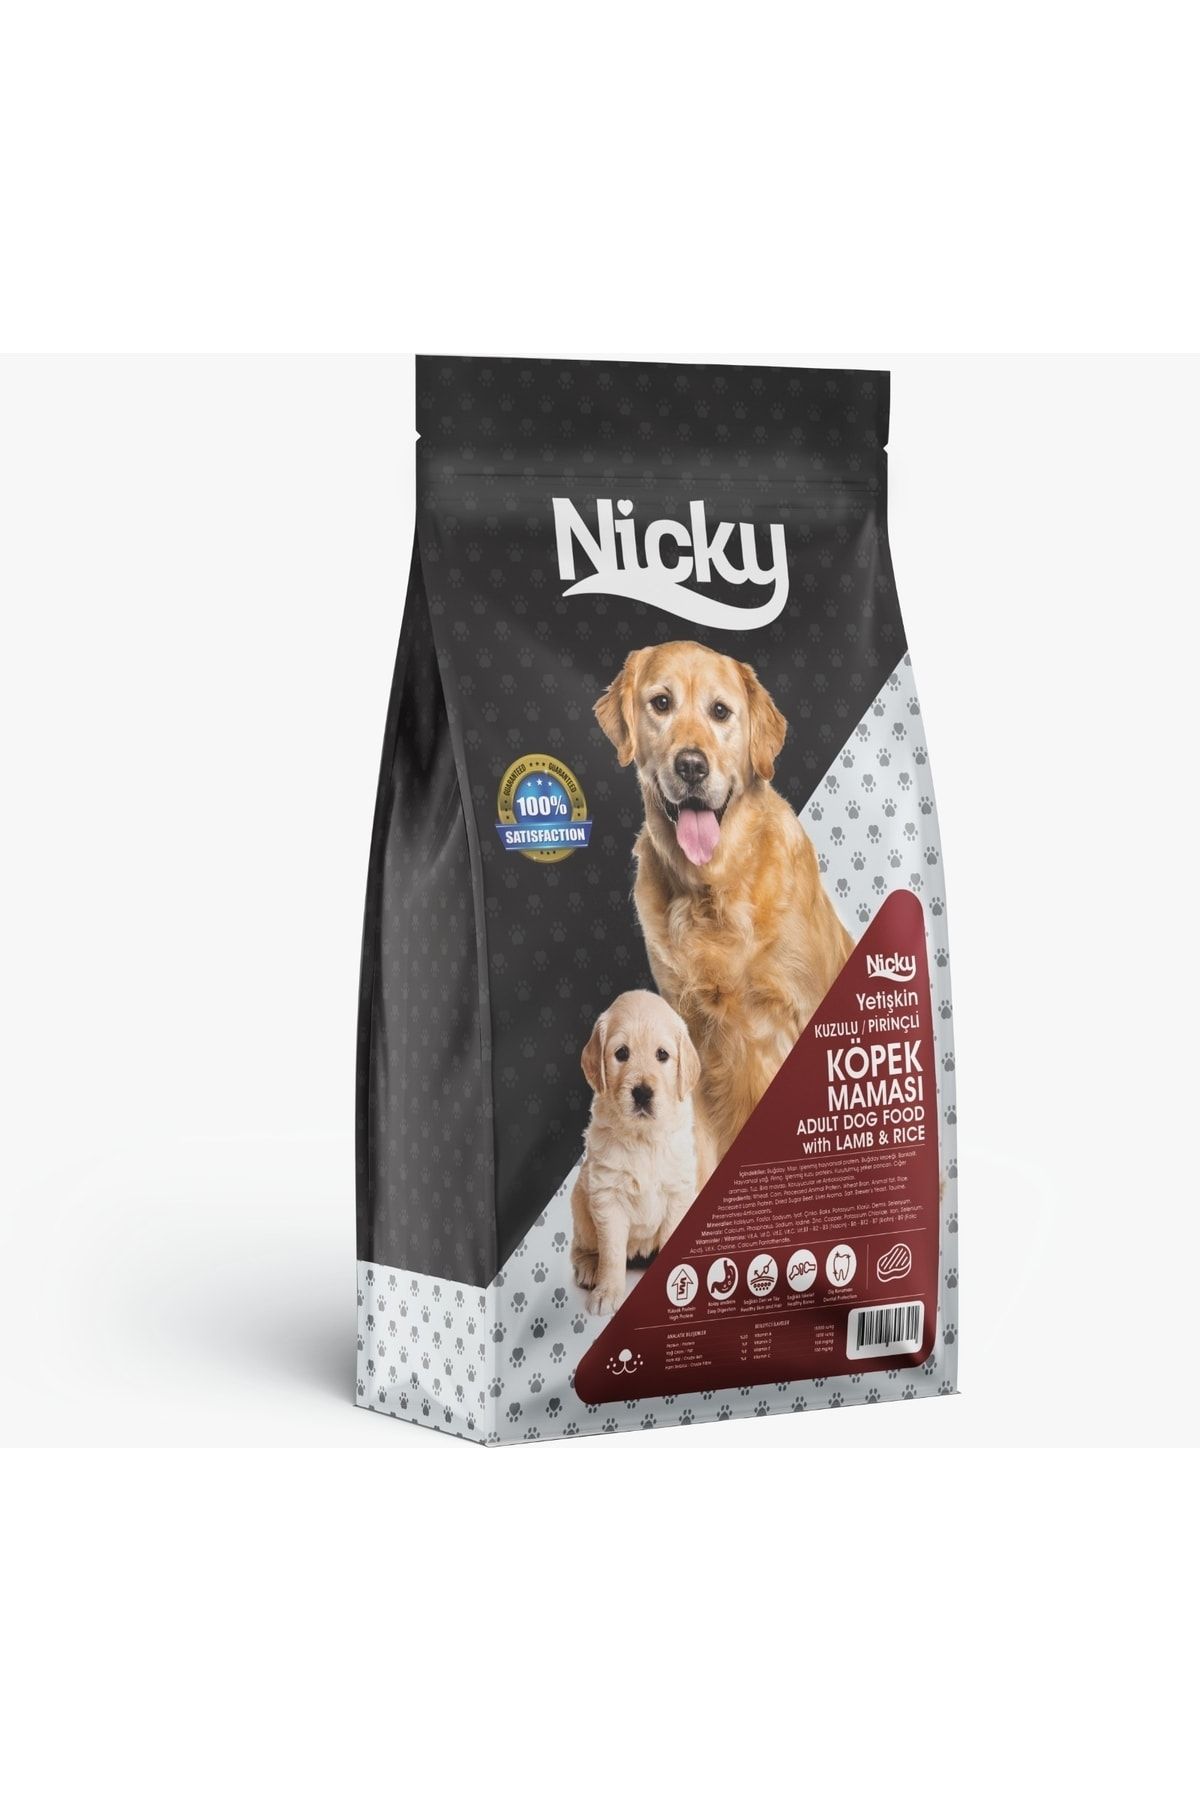 Nicky Yetişkin Kuzulu Pirinçli Köpek Maması - 15 Kg